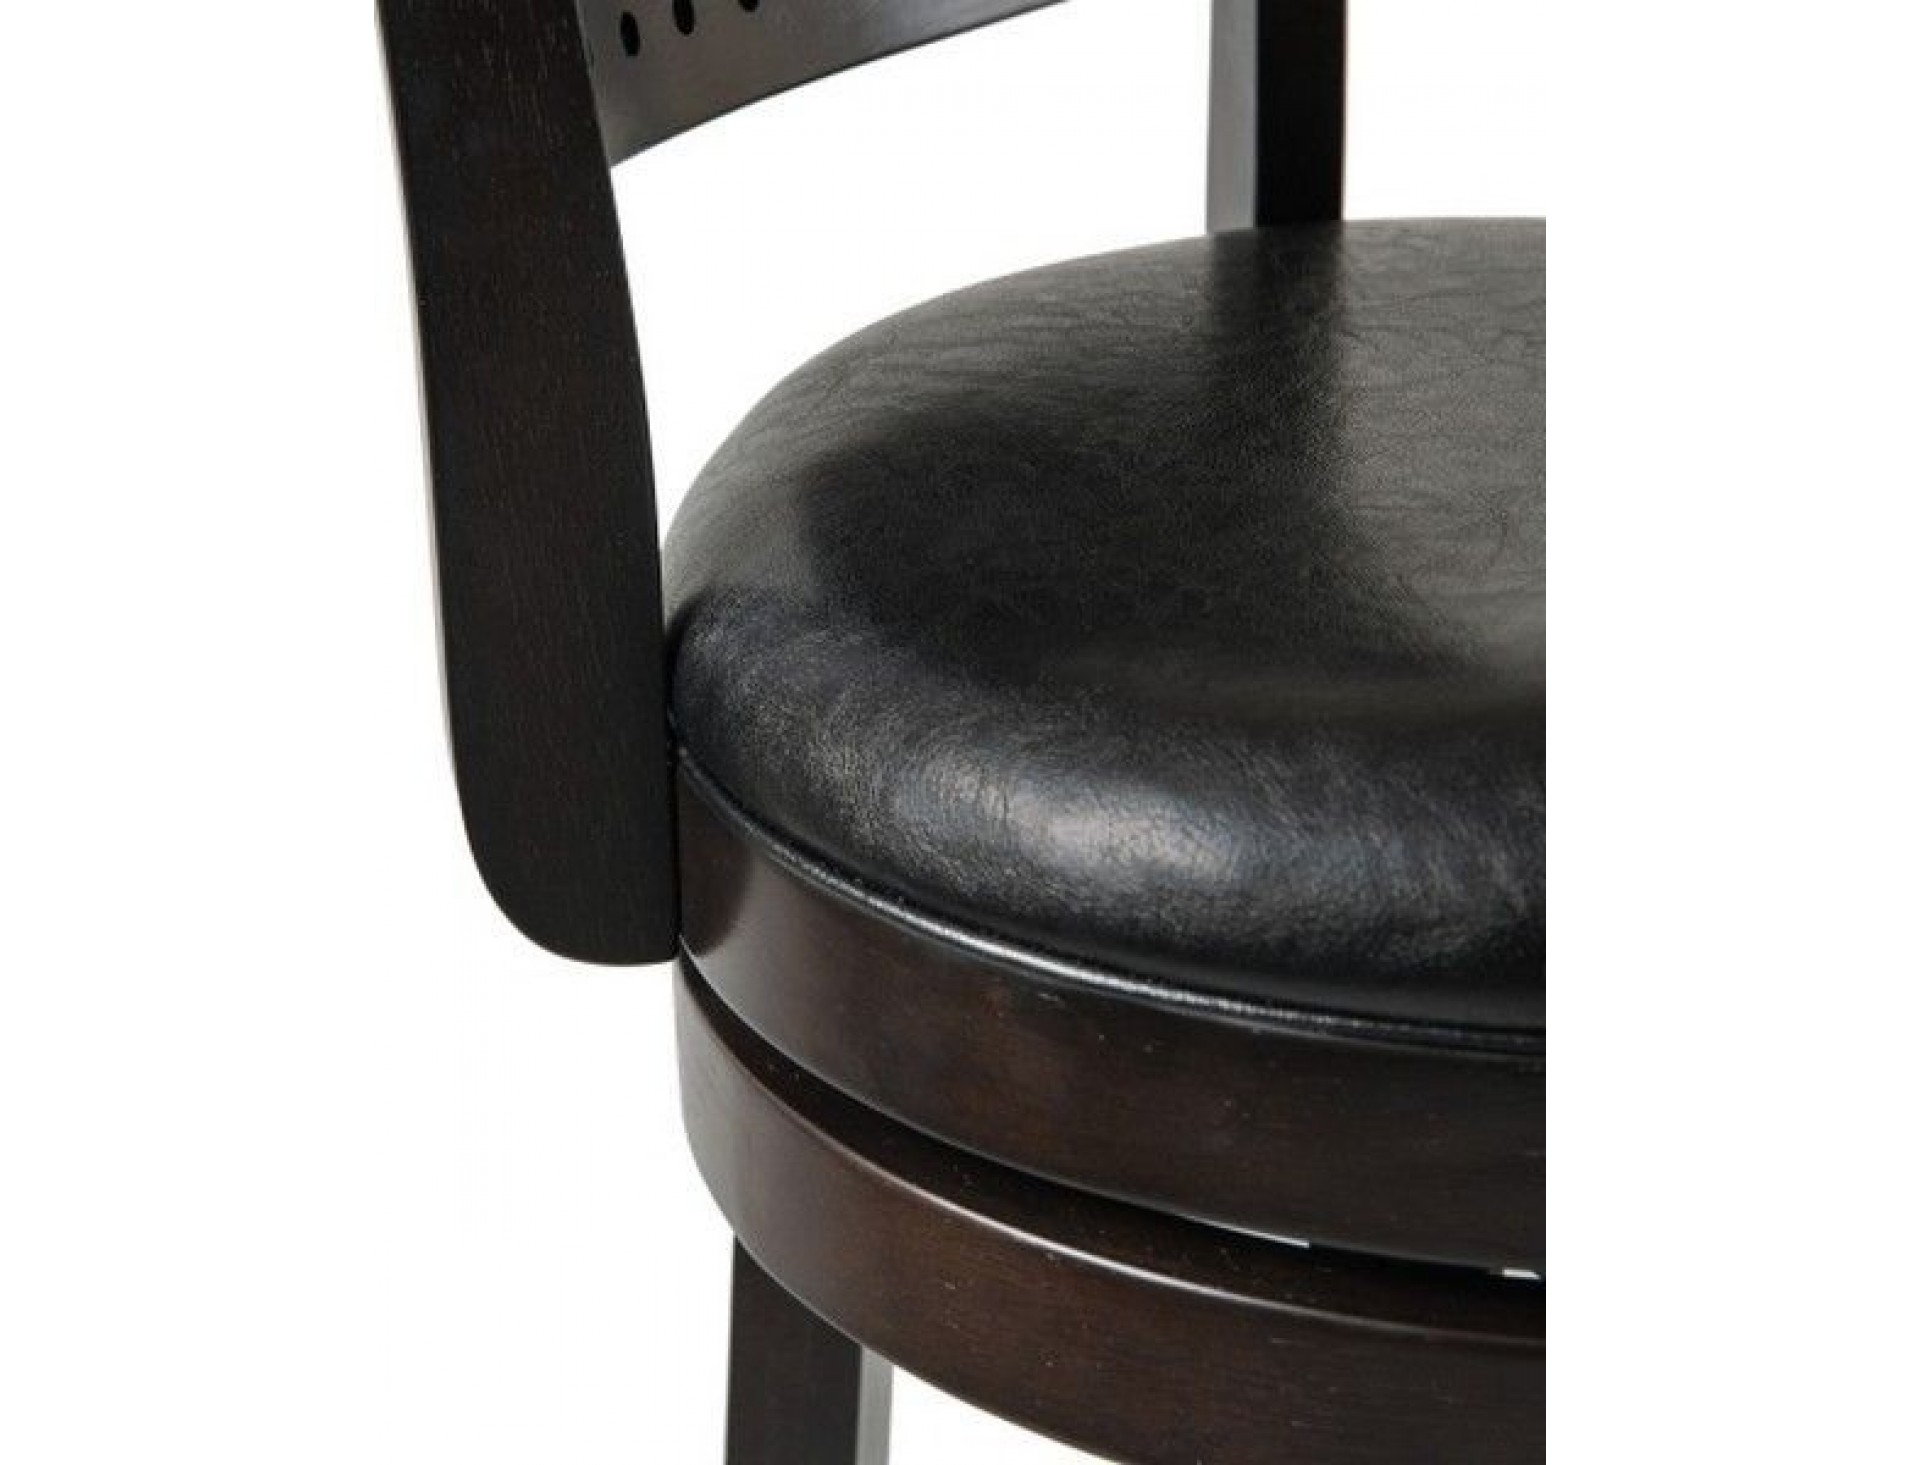 Барный стул из гевеи